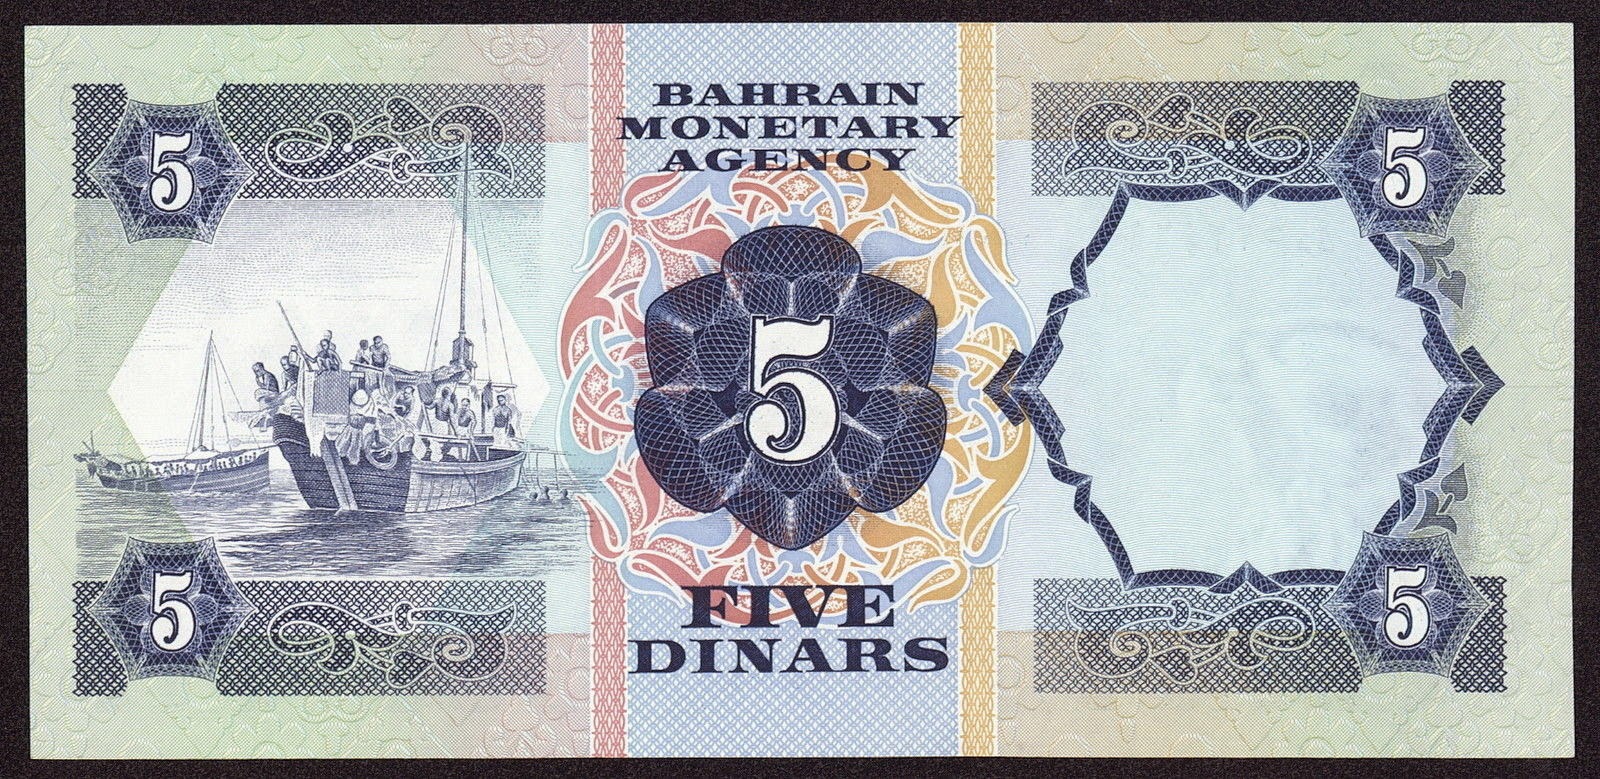 Bahrain Money Currency 5 Dinar bank note 1979 Bahrain Monetary Agency